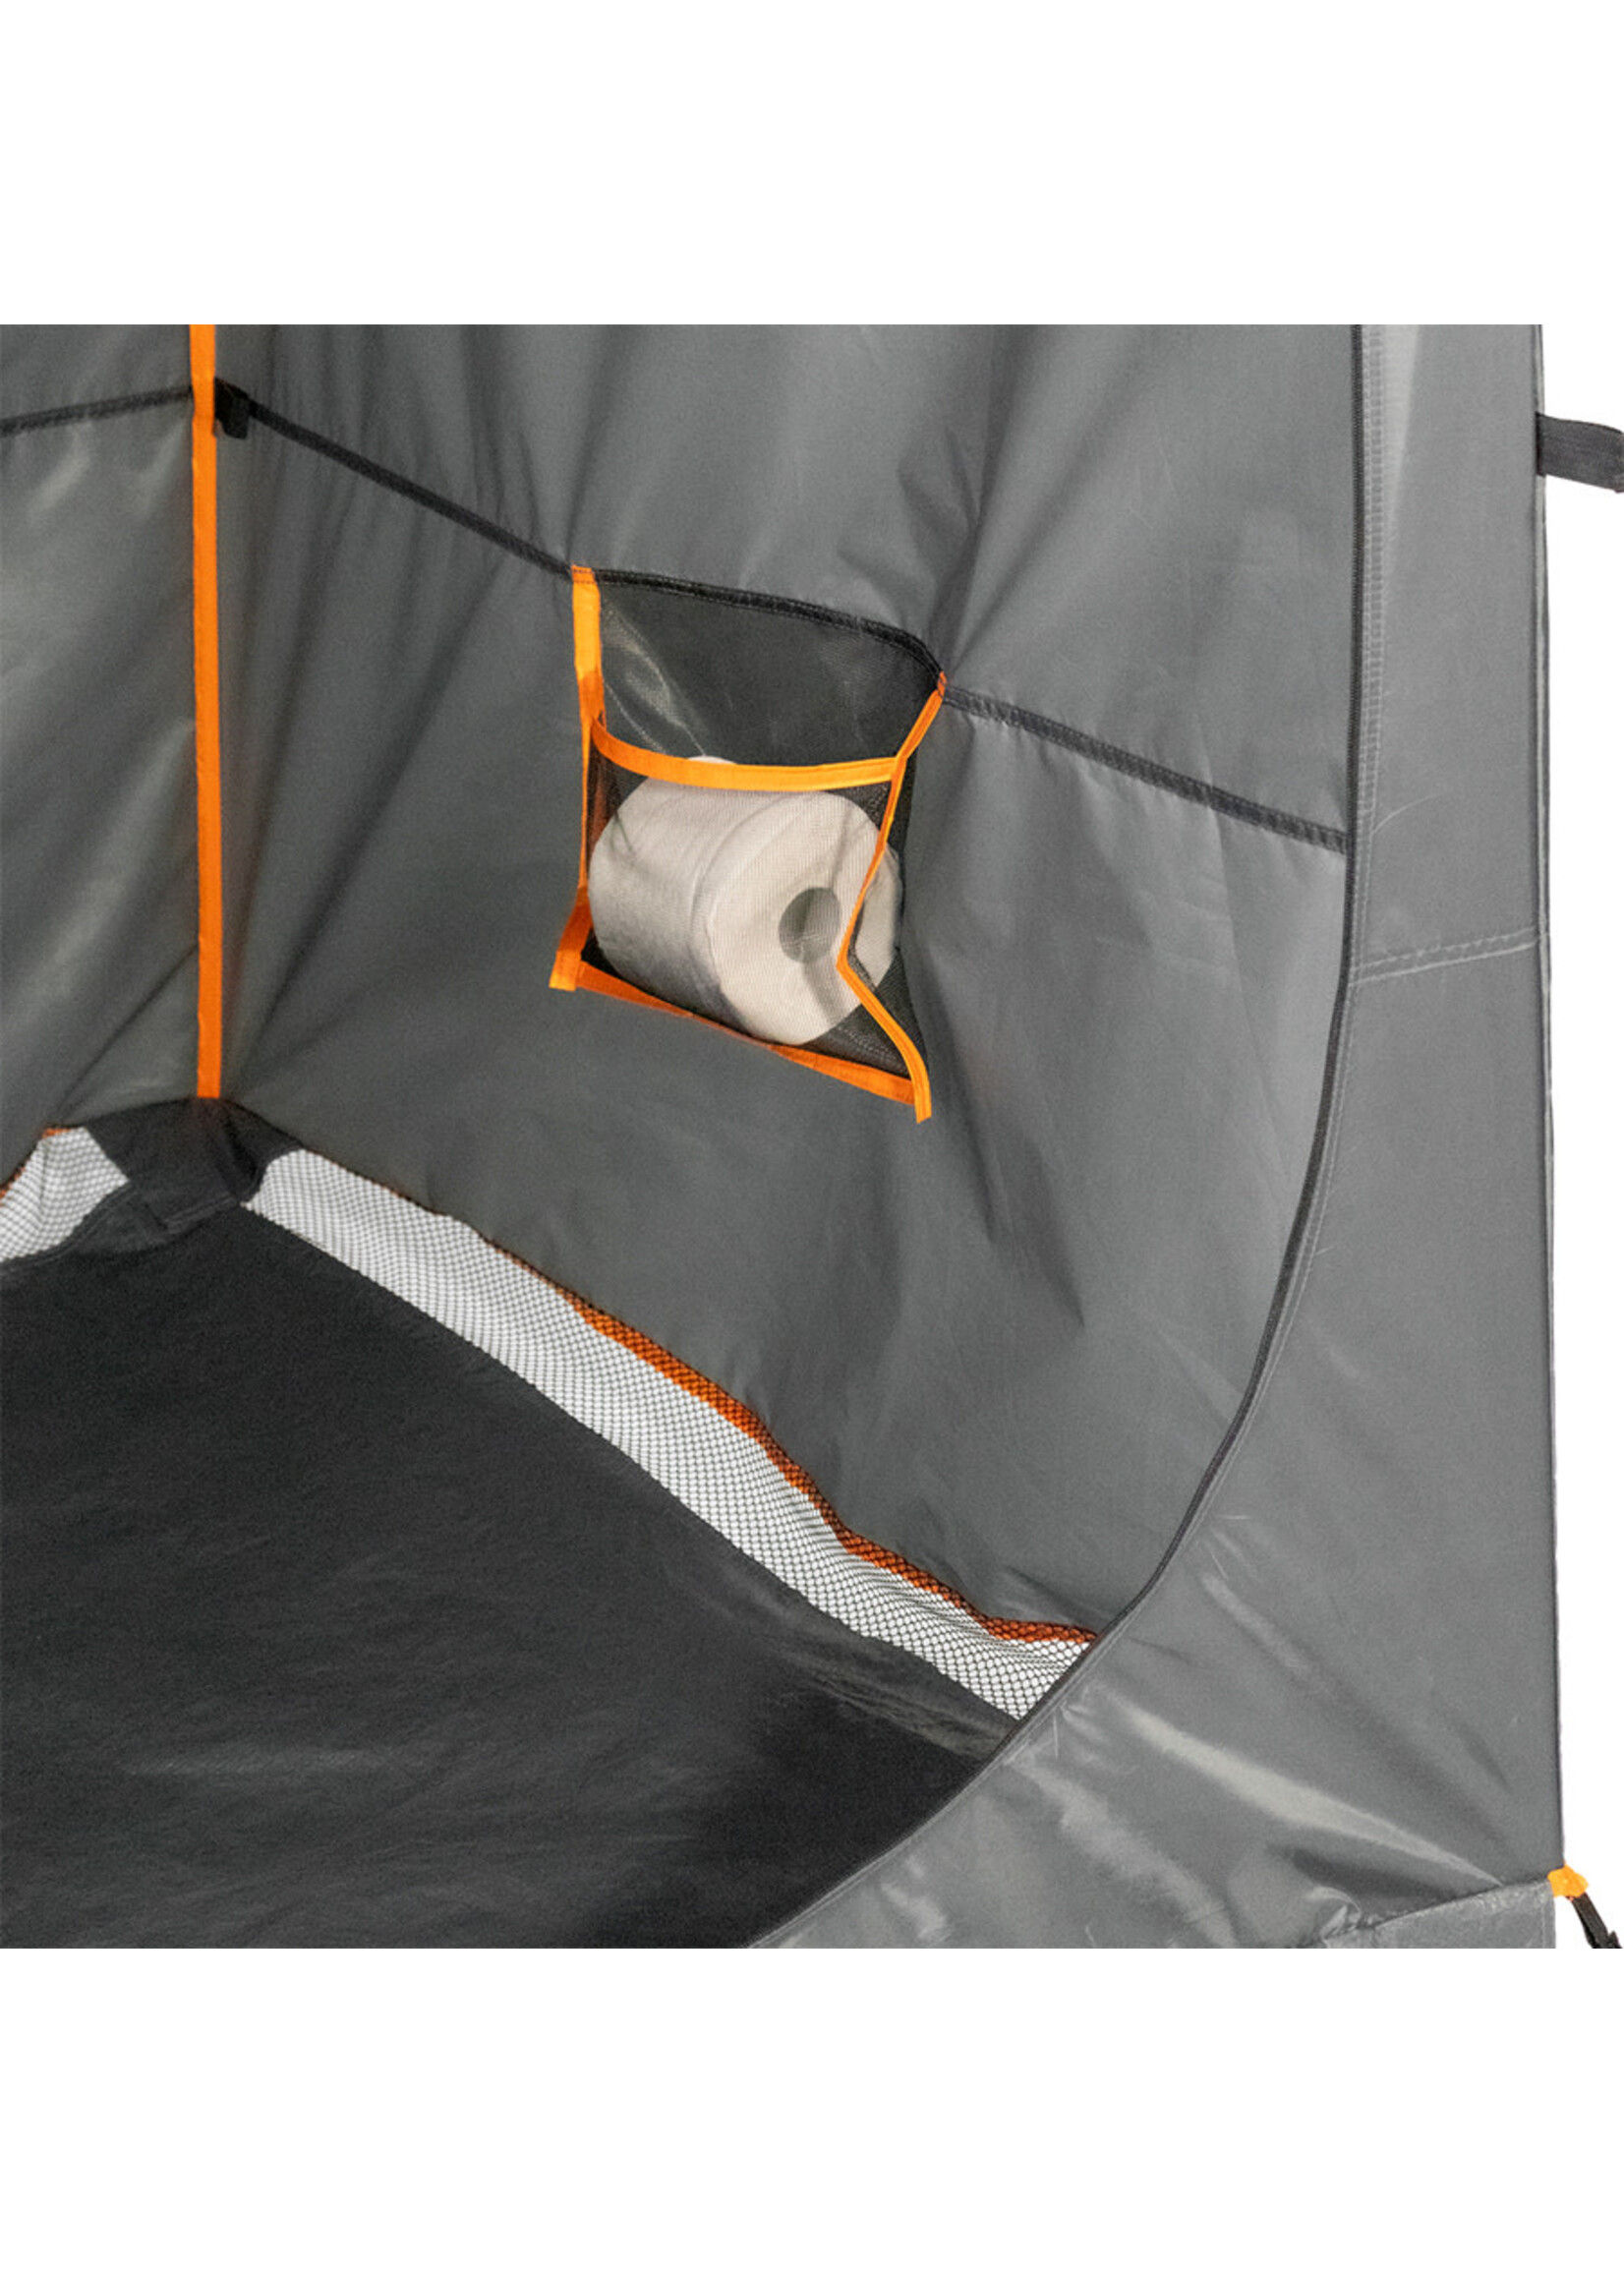 KUMA Tente Peaks Privacy Shelter